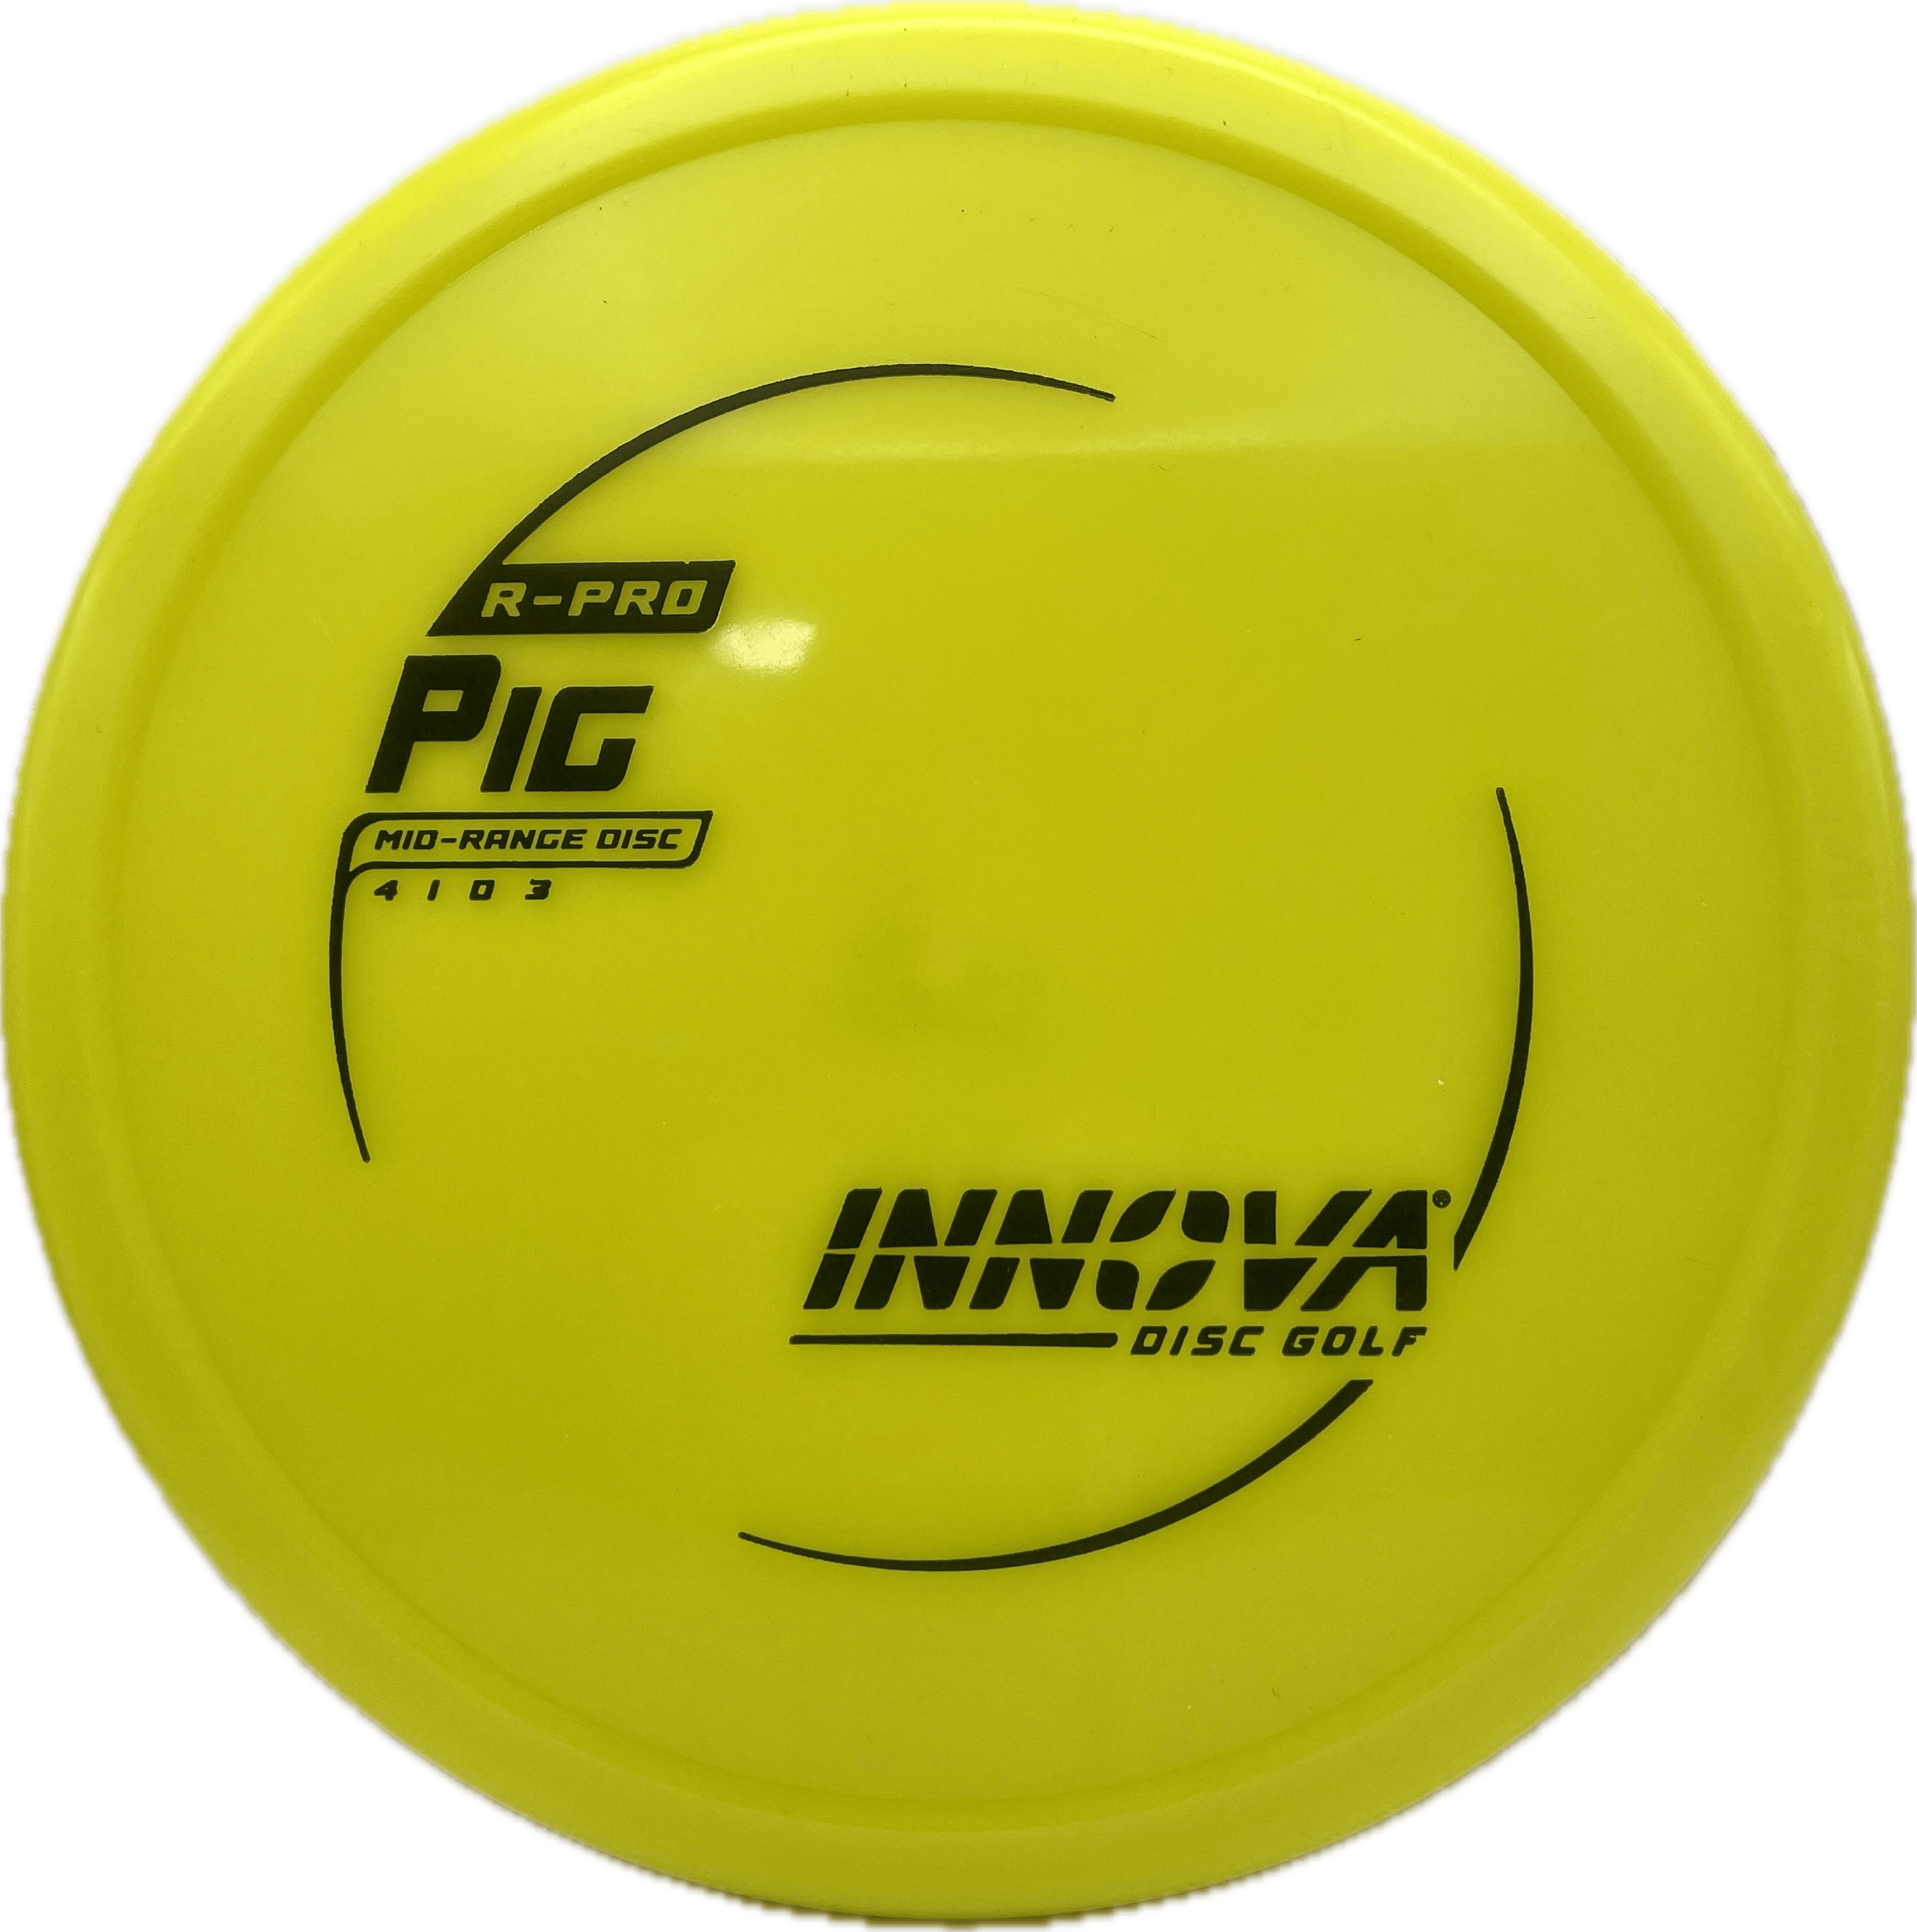 Innova Disc Innova Pig, R-Pro, 171, Yellow, Black Matte